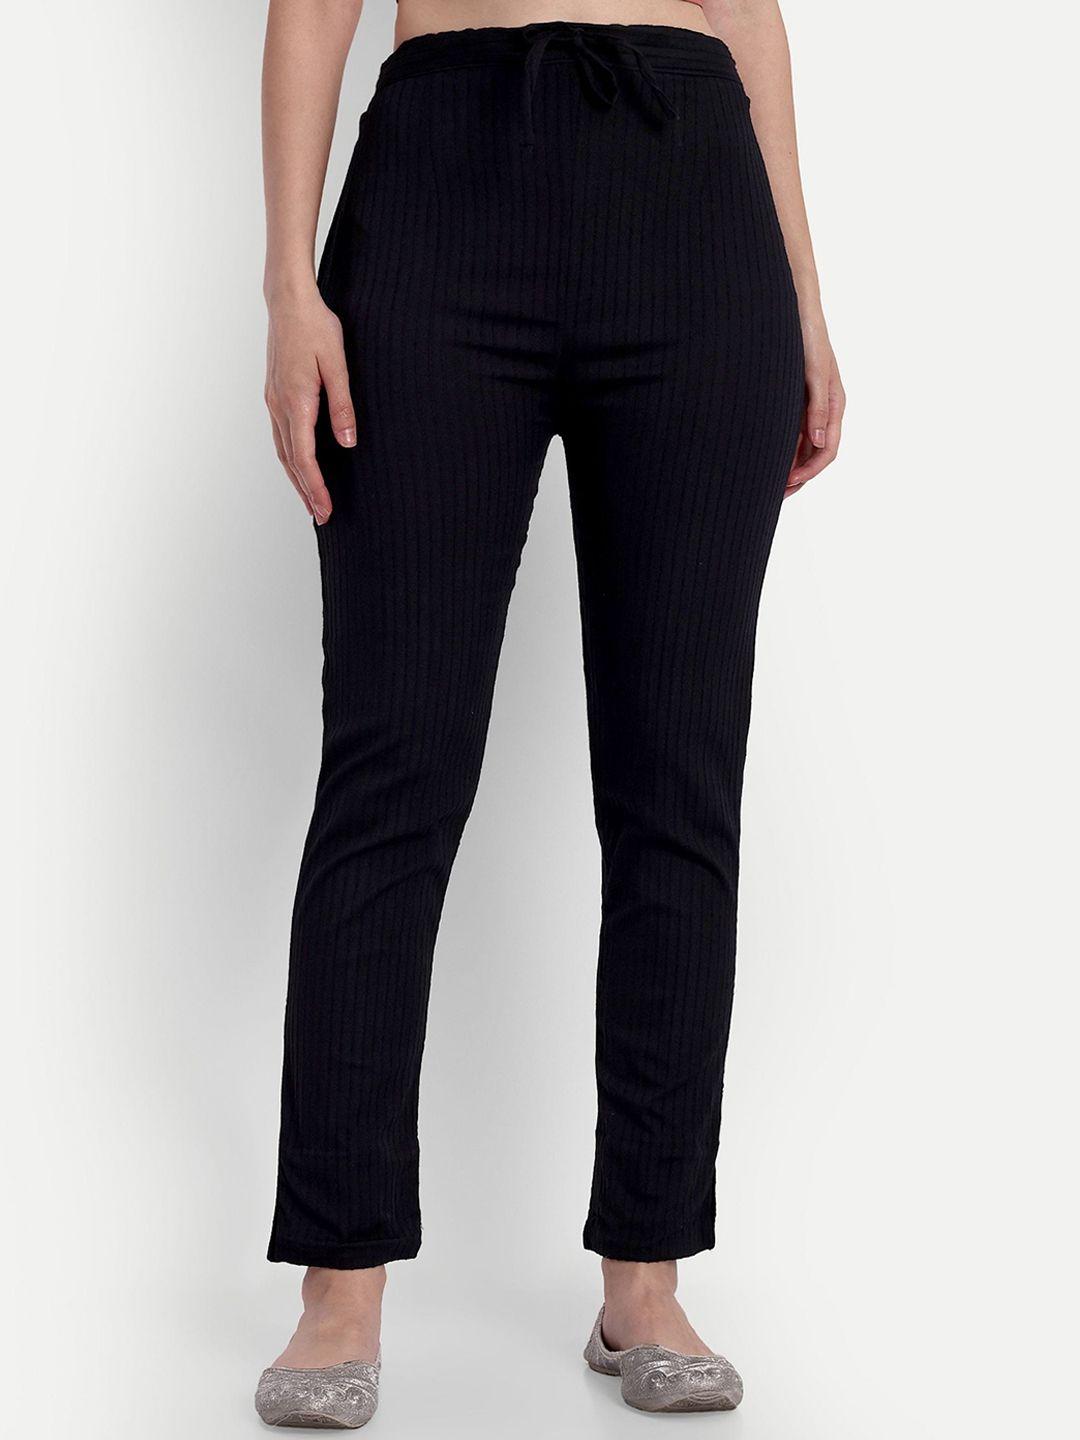 bcz style women black striped comfort slim fit trousers